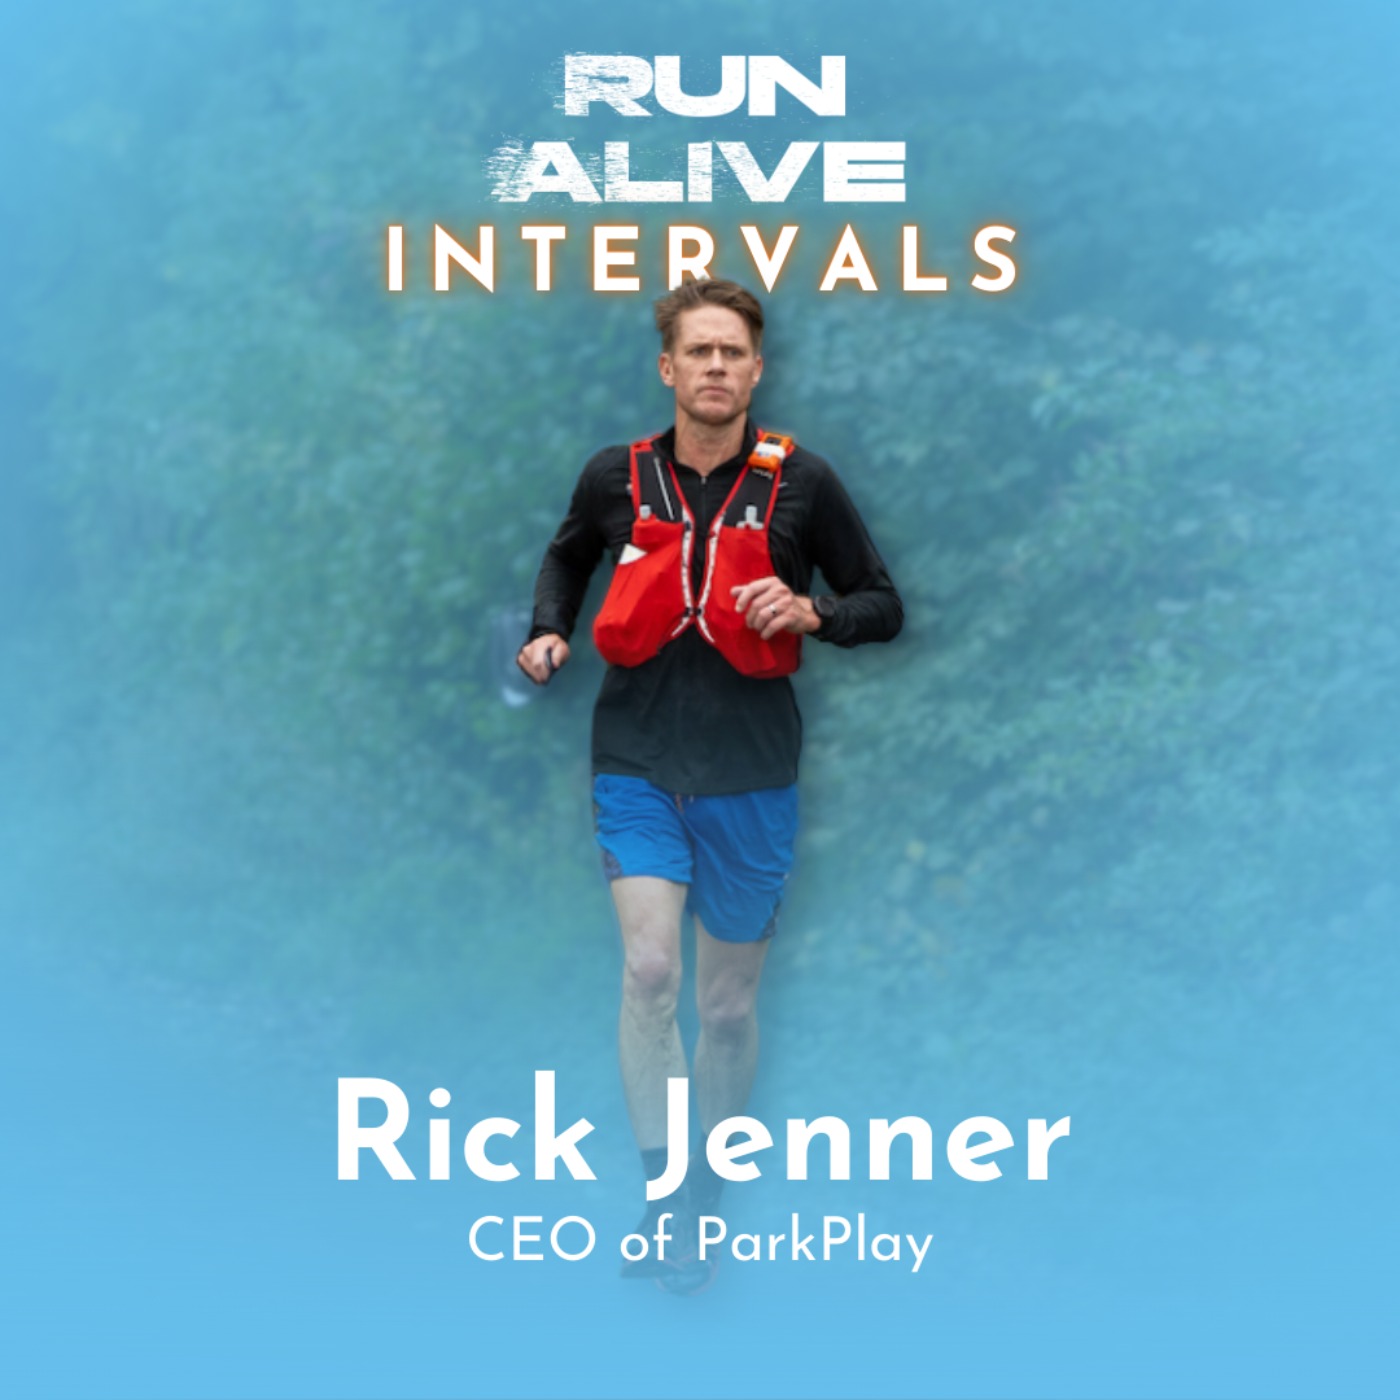 RunAlive Intervals - ParkPlay CEO Rick Jenner